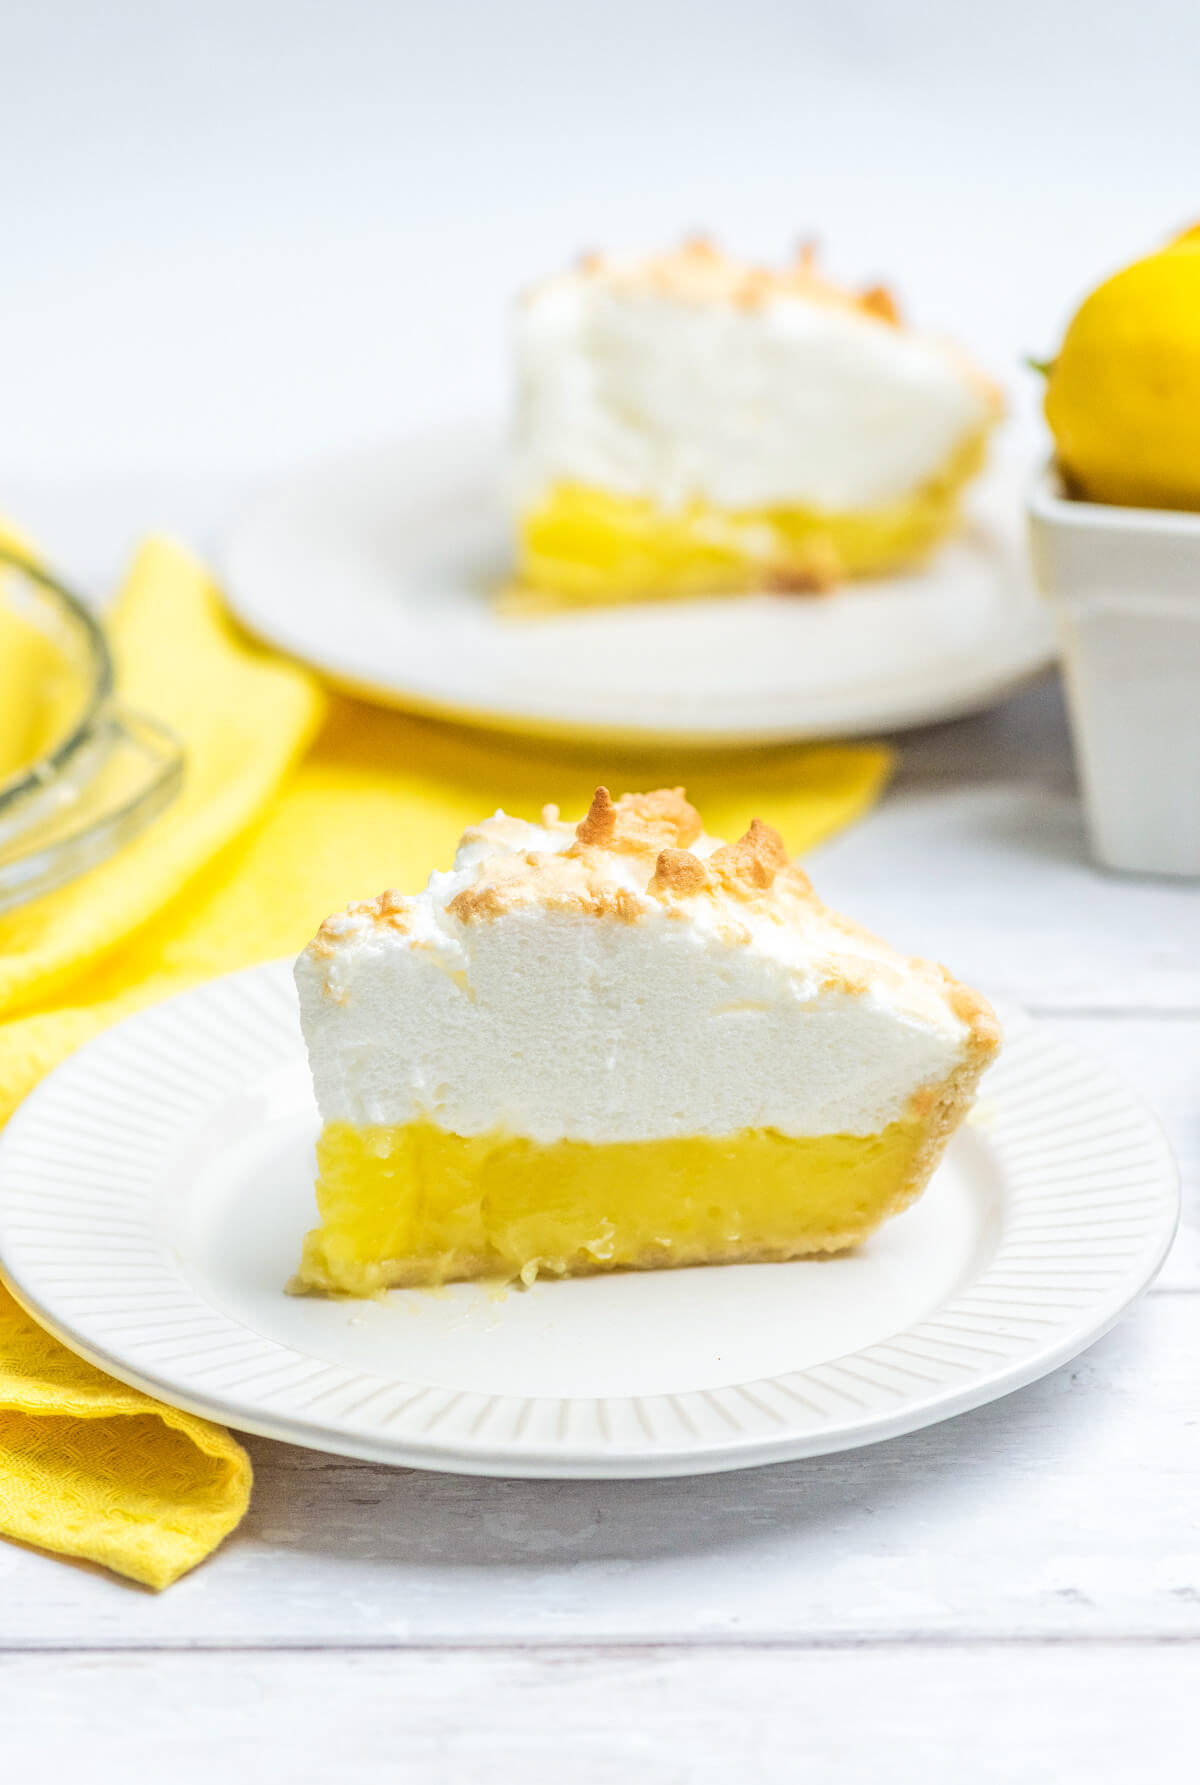 Two slices of lemon meringue pie on white plates with a yellow napkin. 